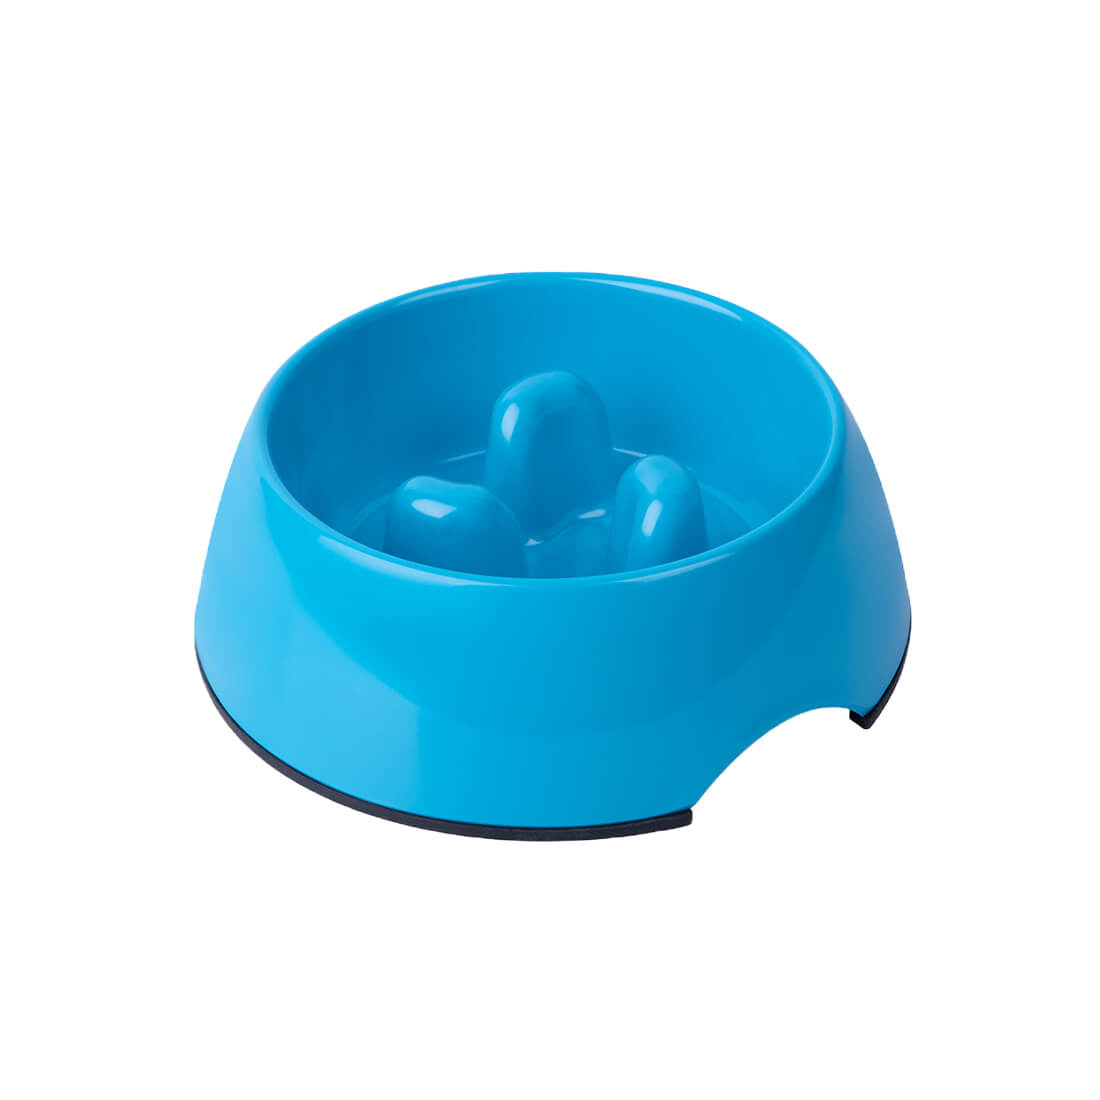 NOYAL Slow Feeder Dog Bowls Puzzle Anti-Gulping Interactive Bloat Durable  Preventing Choking Healthy Dogs Bowl